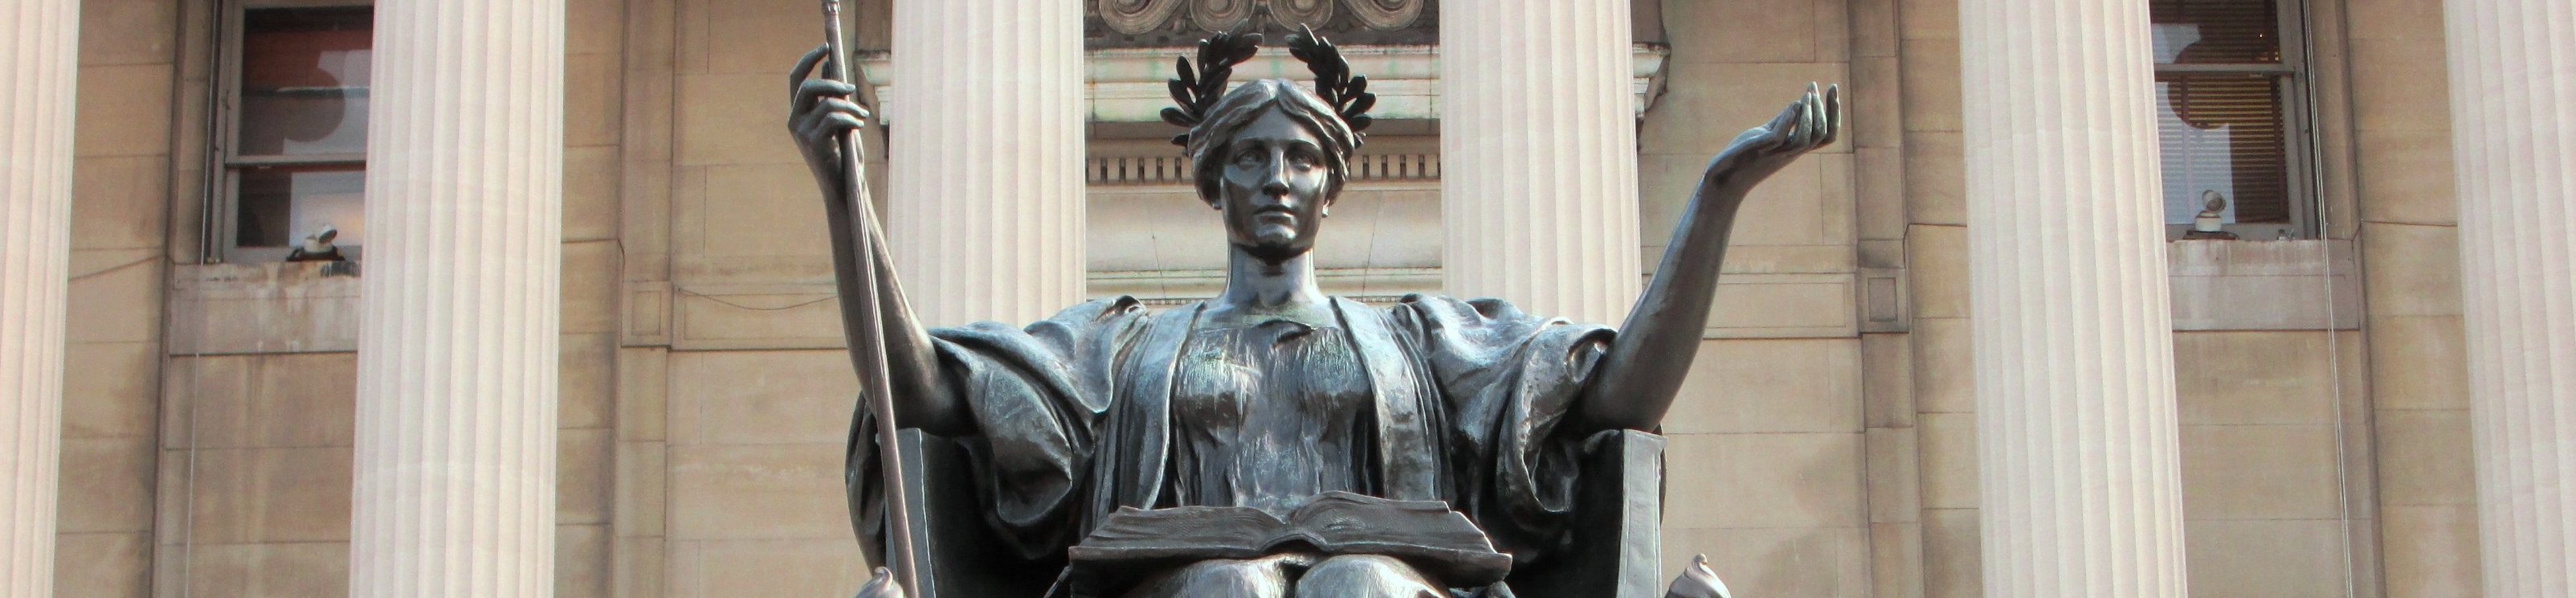 Statue outside Columbia University